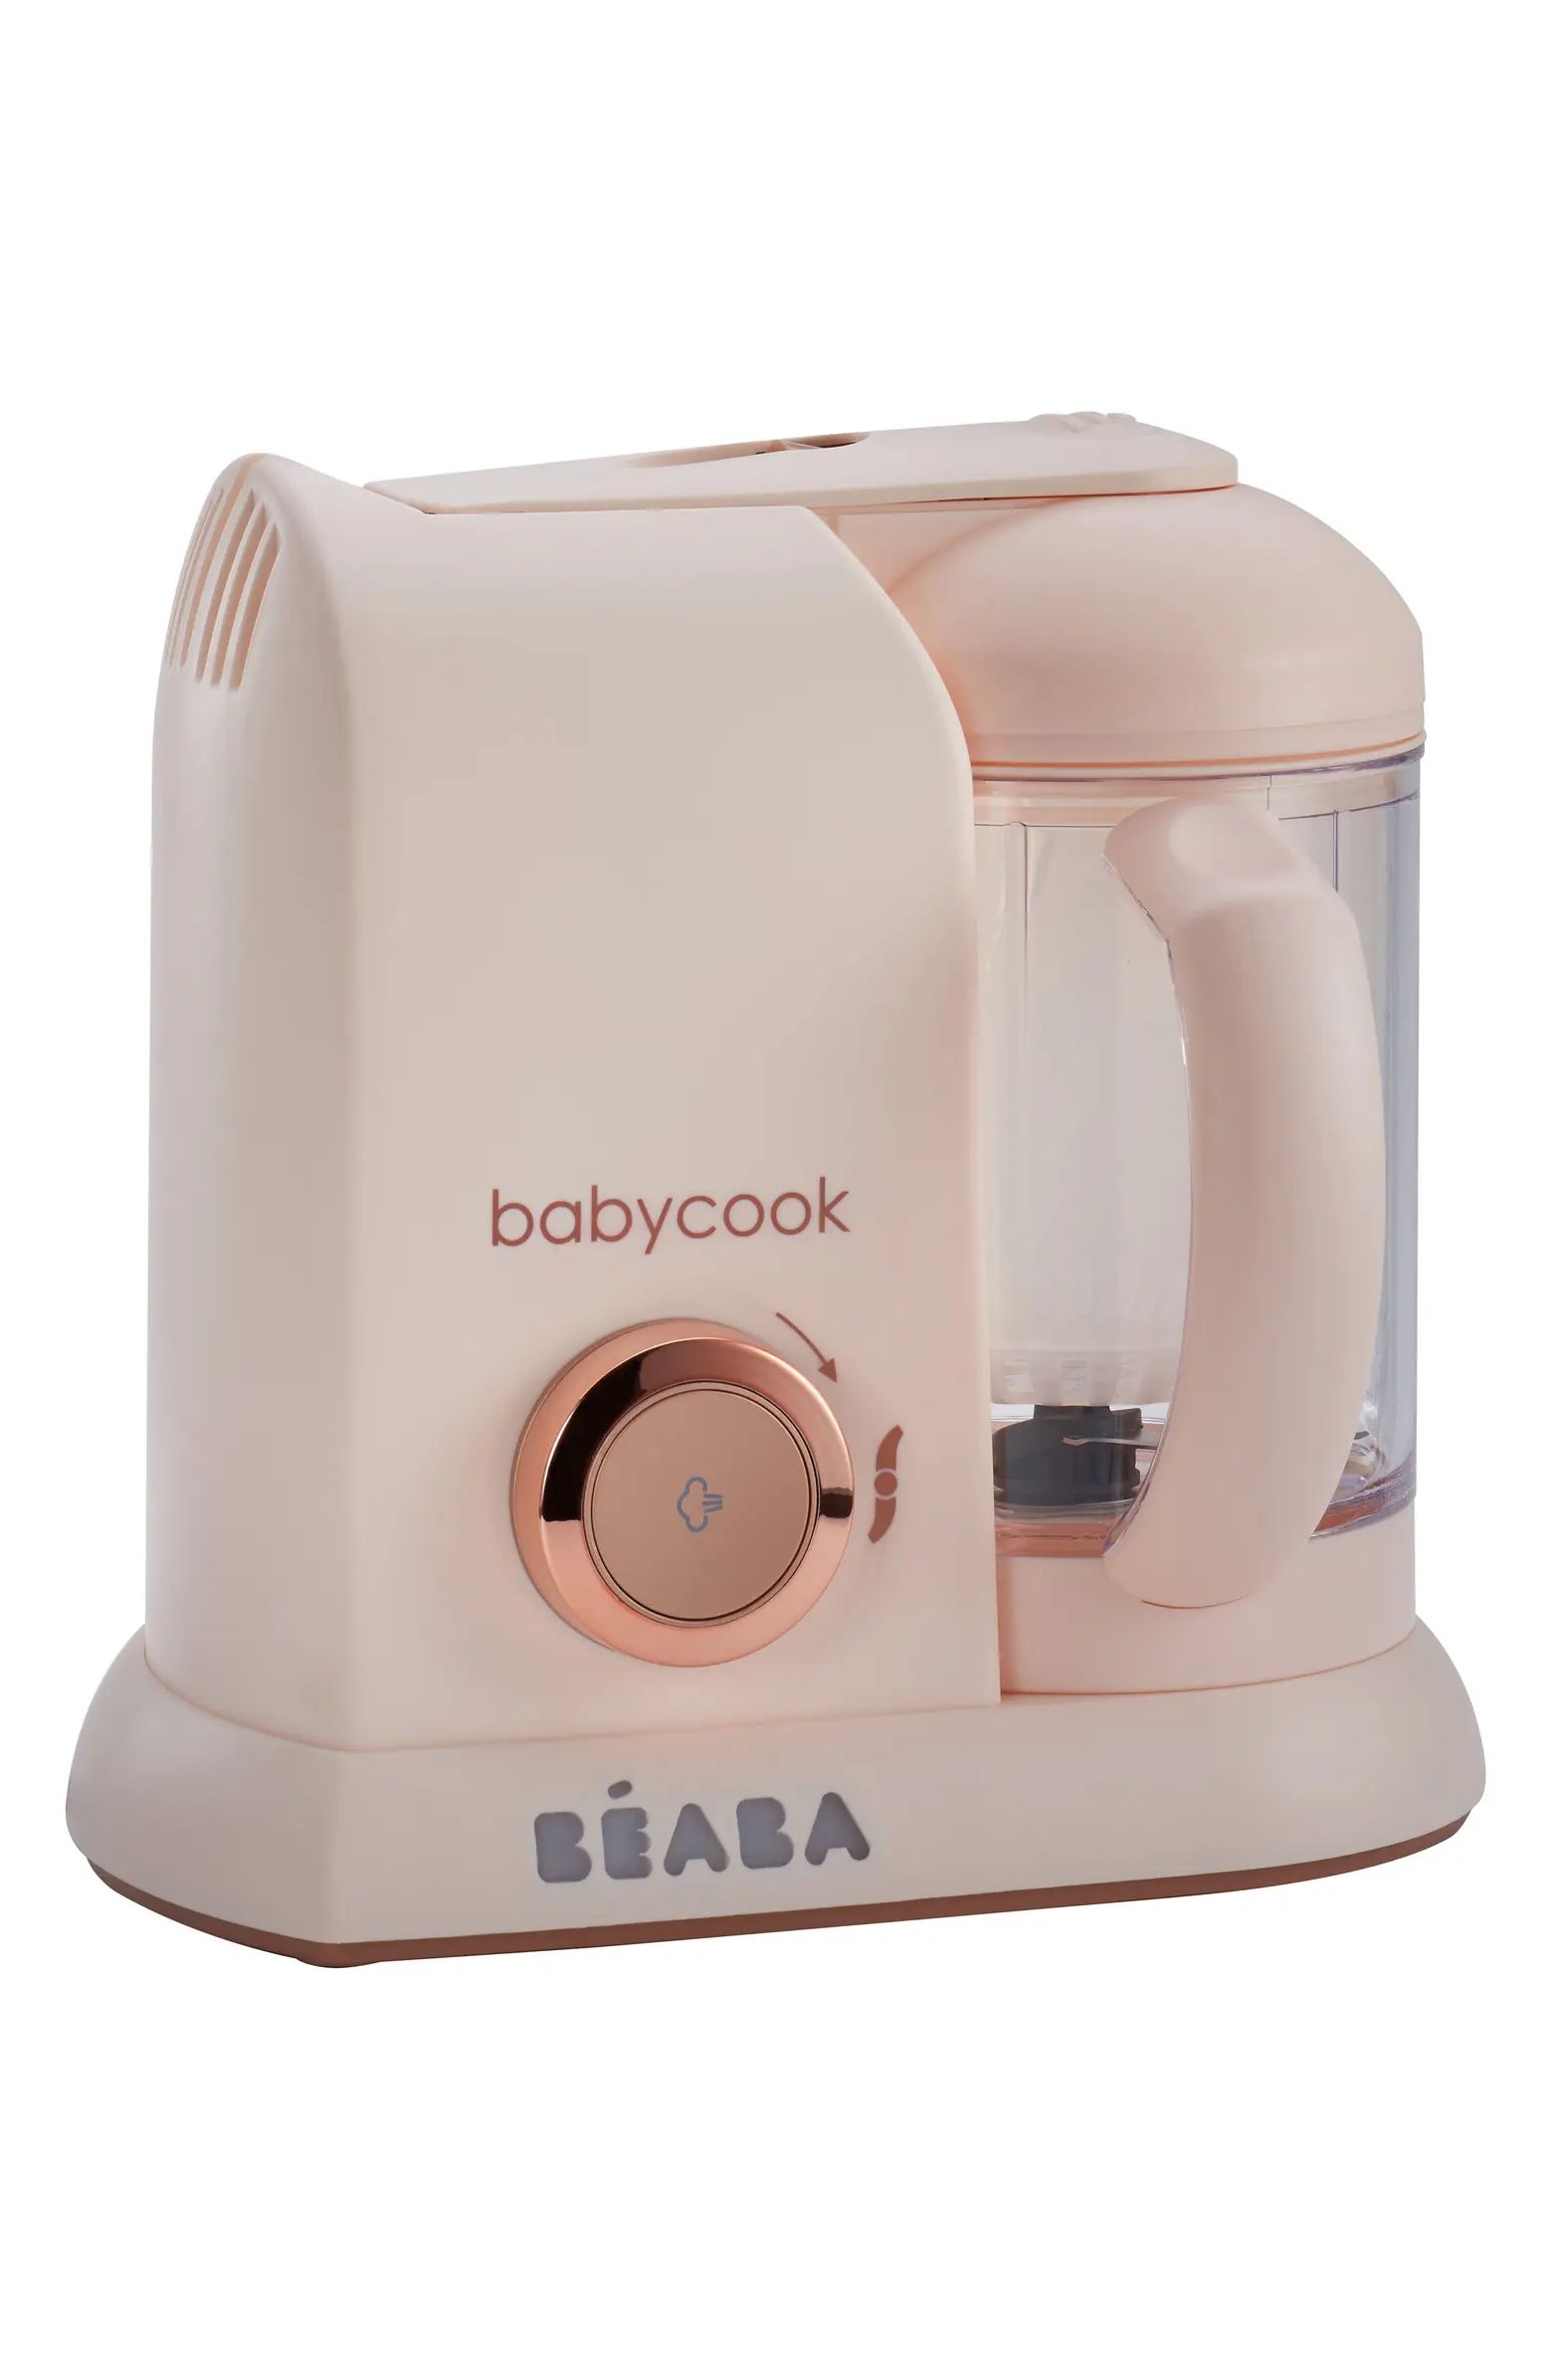 BEABA Babycook Baby Food Maker | Nordstrom | Nordstrom